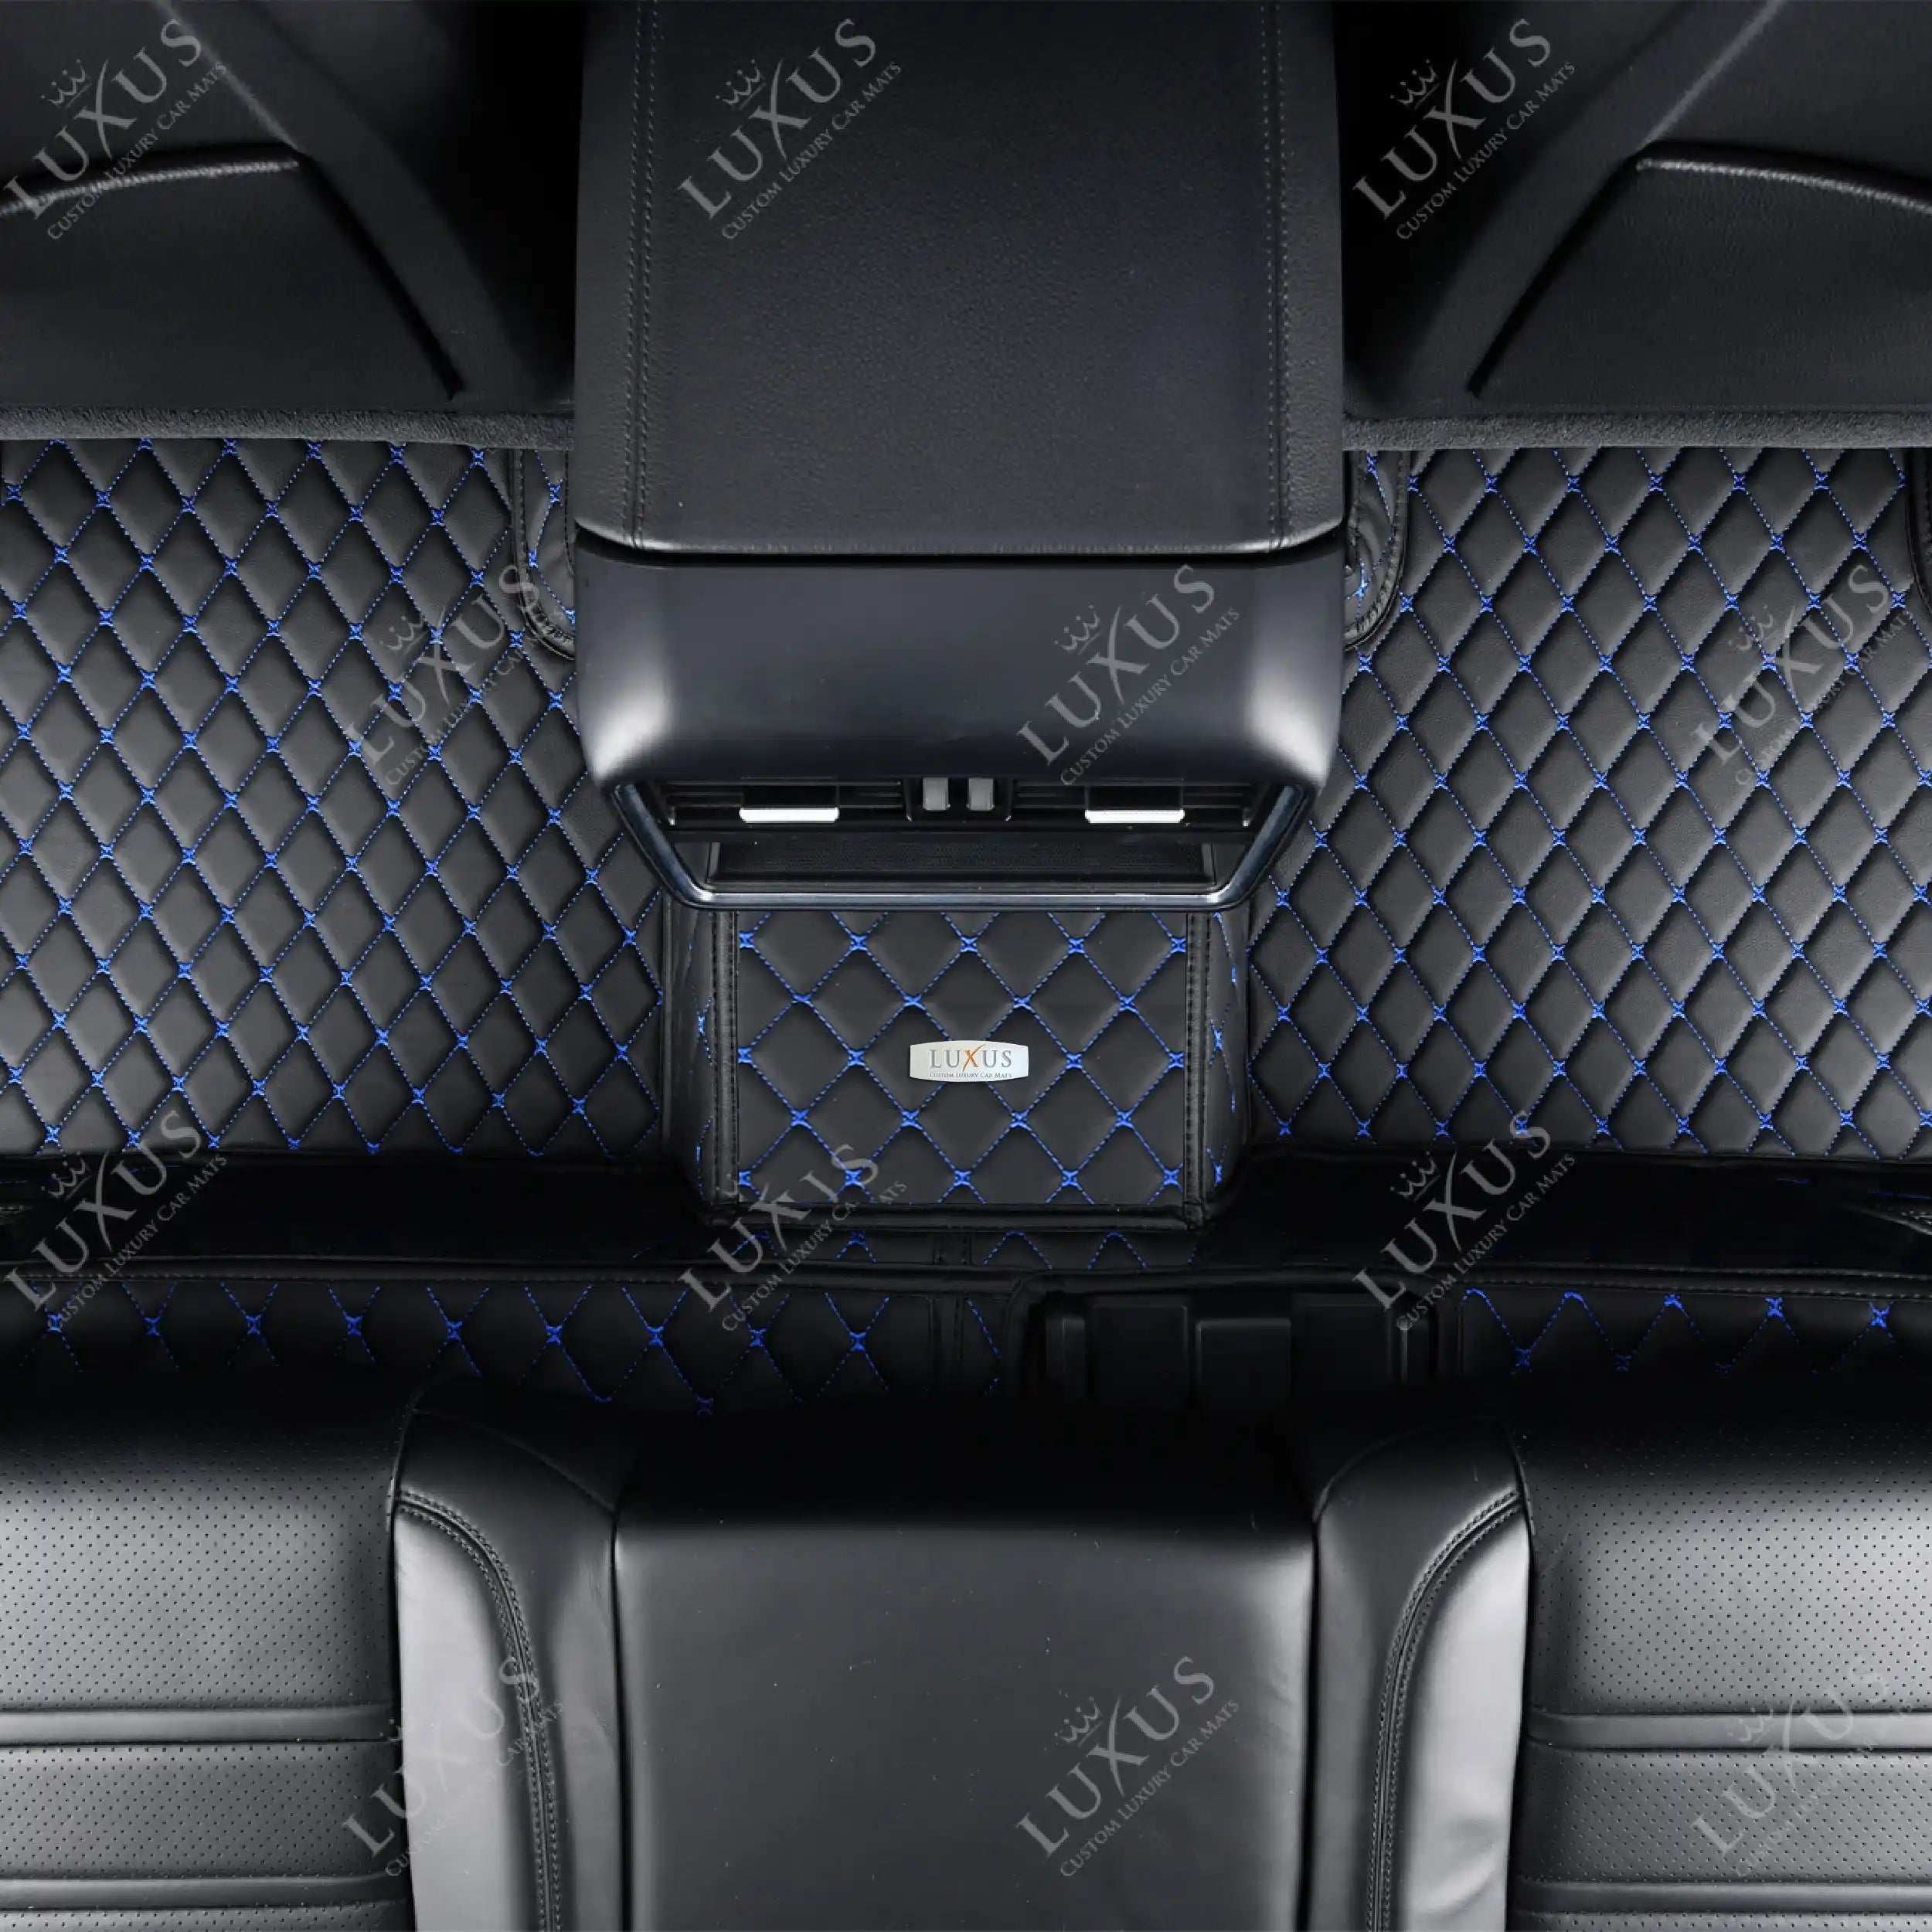 Black & Blue Stitching Diamond Luxury Car Mats Set